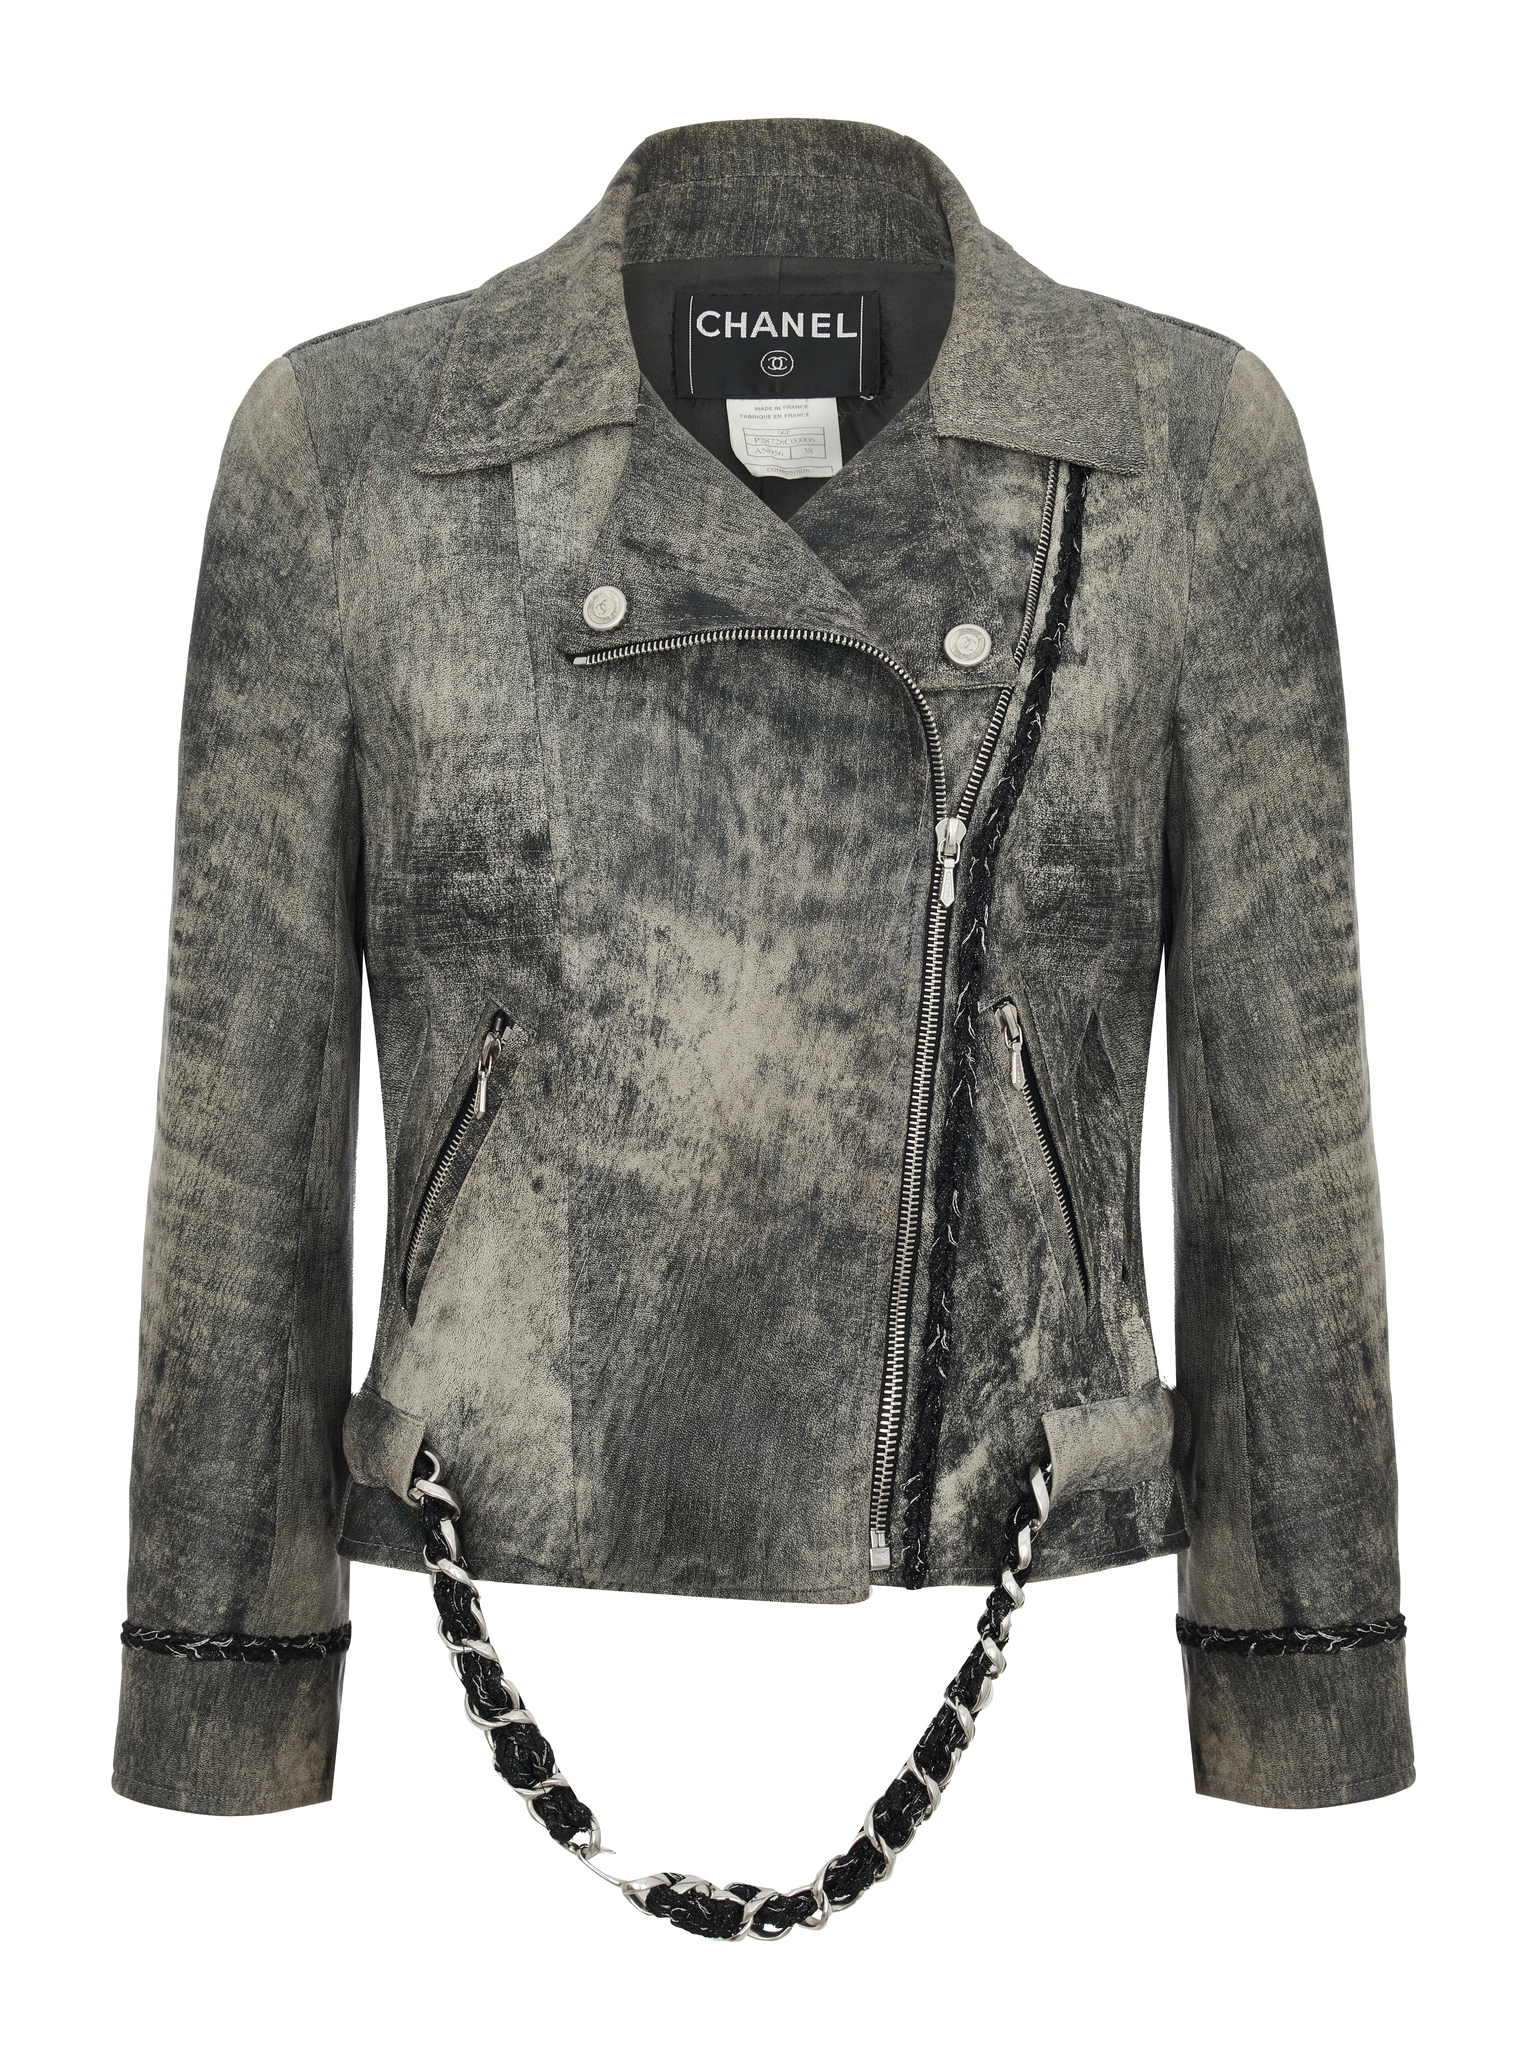 Кожаная куртка Chanel «Гранж» коллекция 2006 г., 38 размер